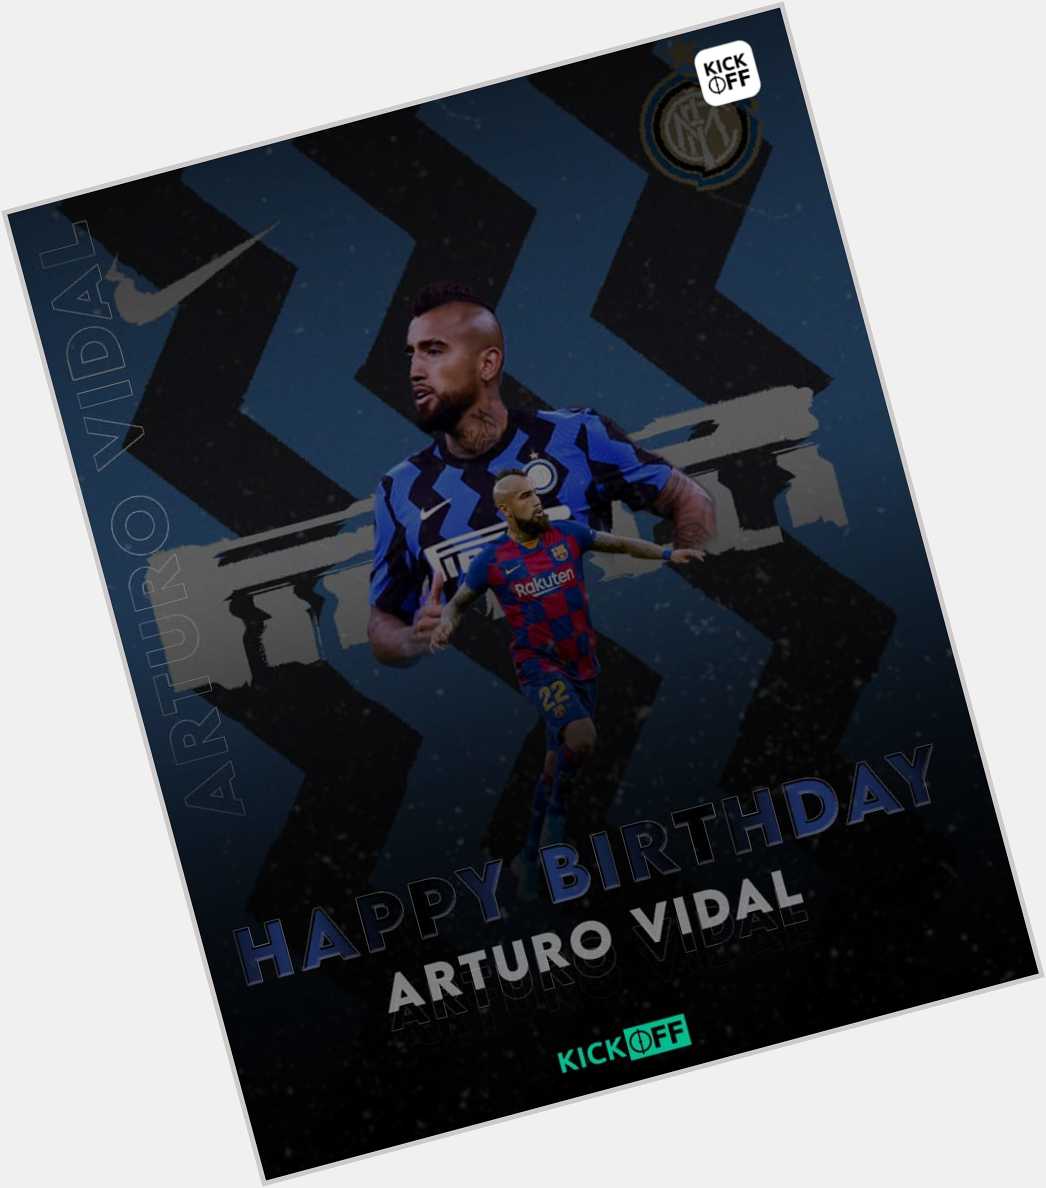 Wishing a very happy birthday to Inter Milan midfielder Arturo Vidal who turns 34 today!
.
.
.
*© KICKOFF* 